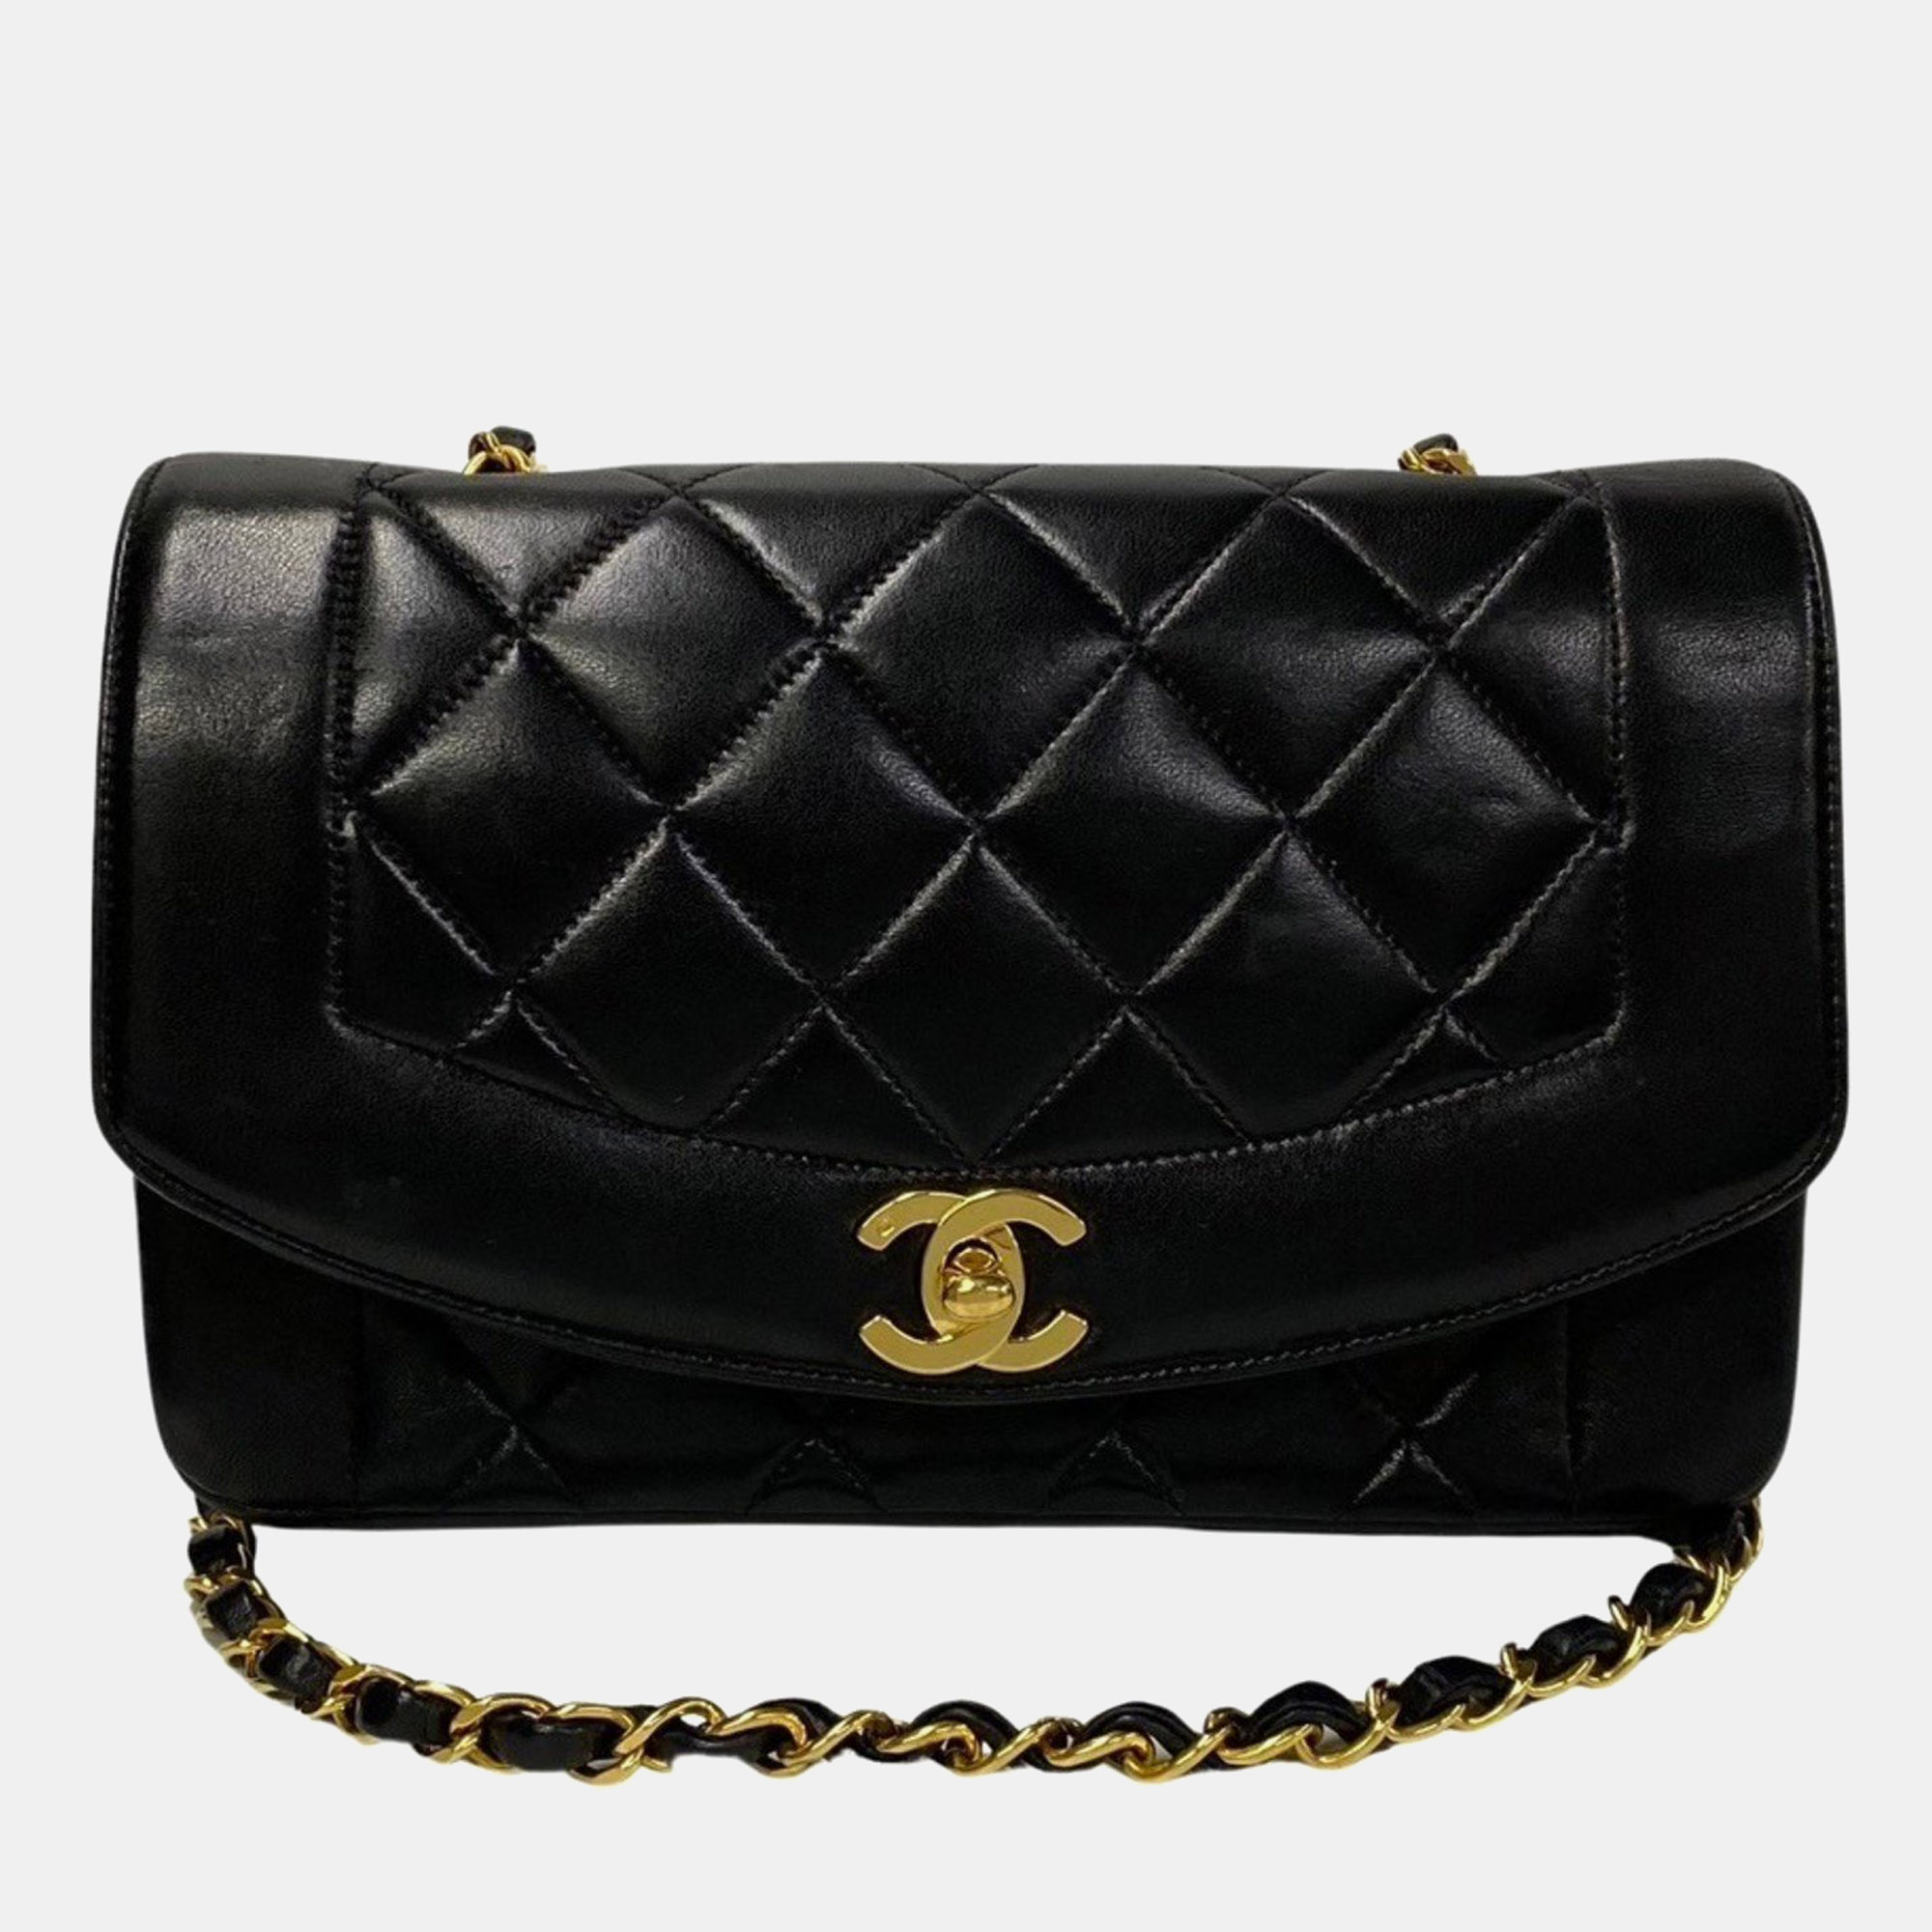 Chanel black leather diana flap bag